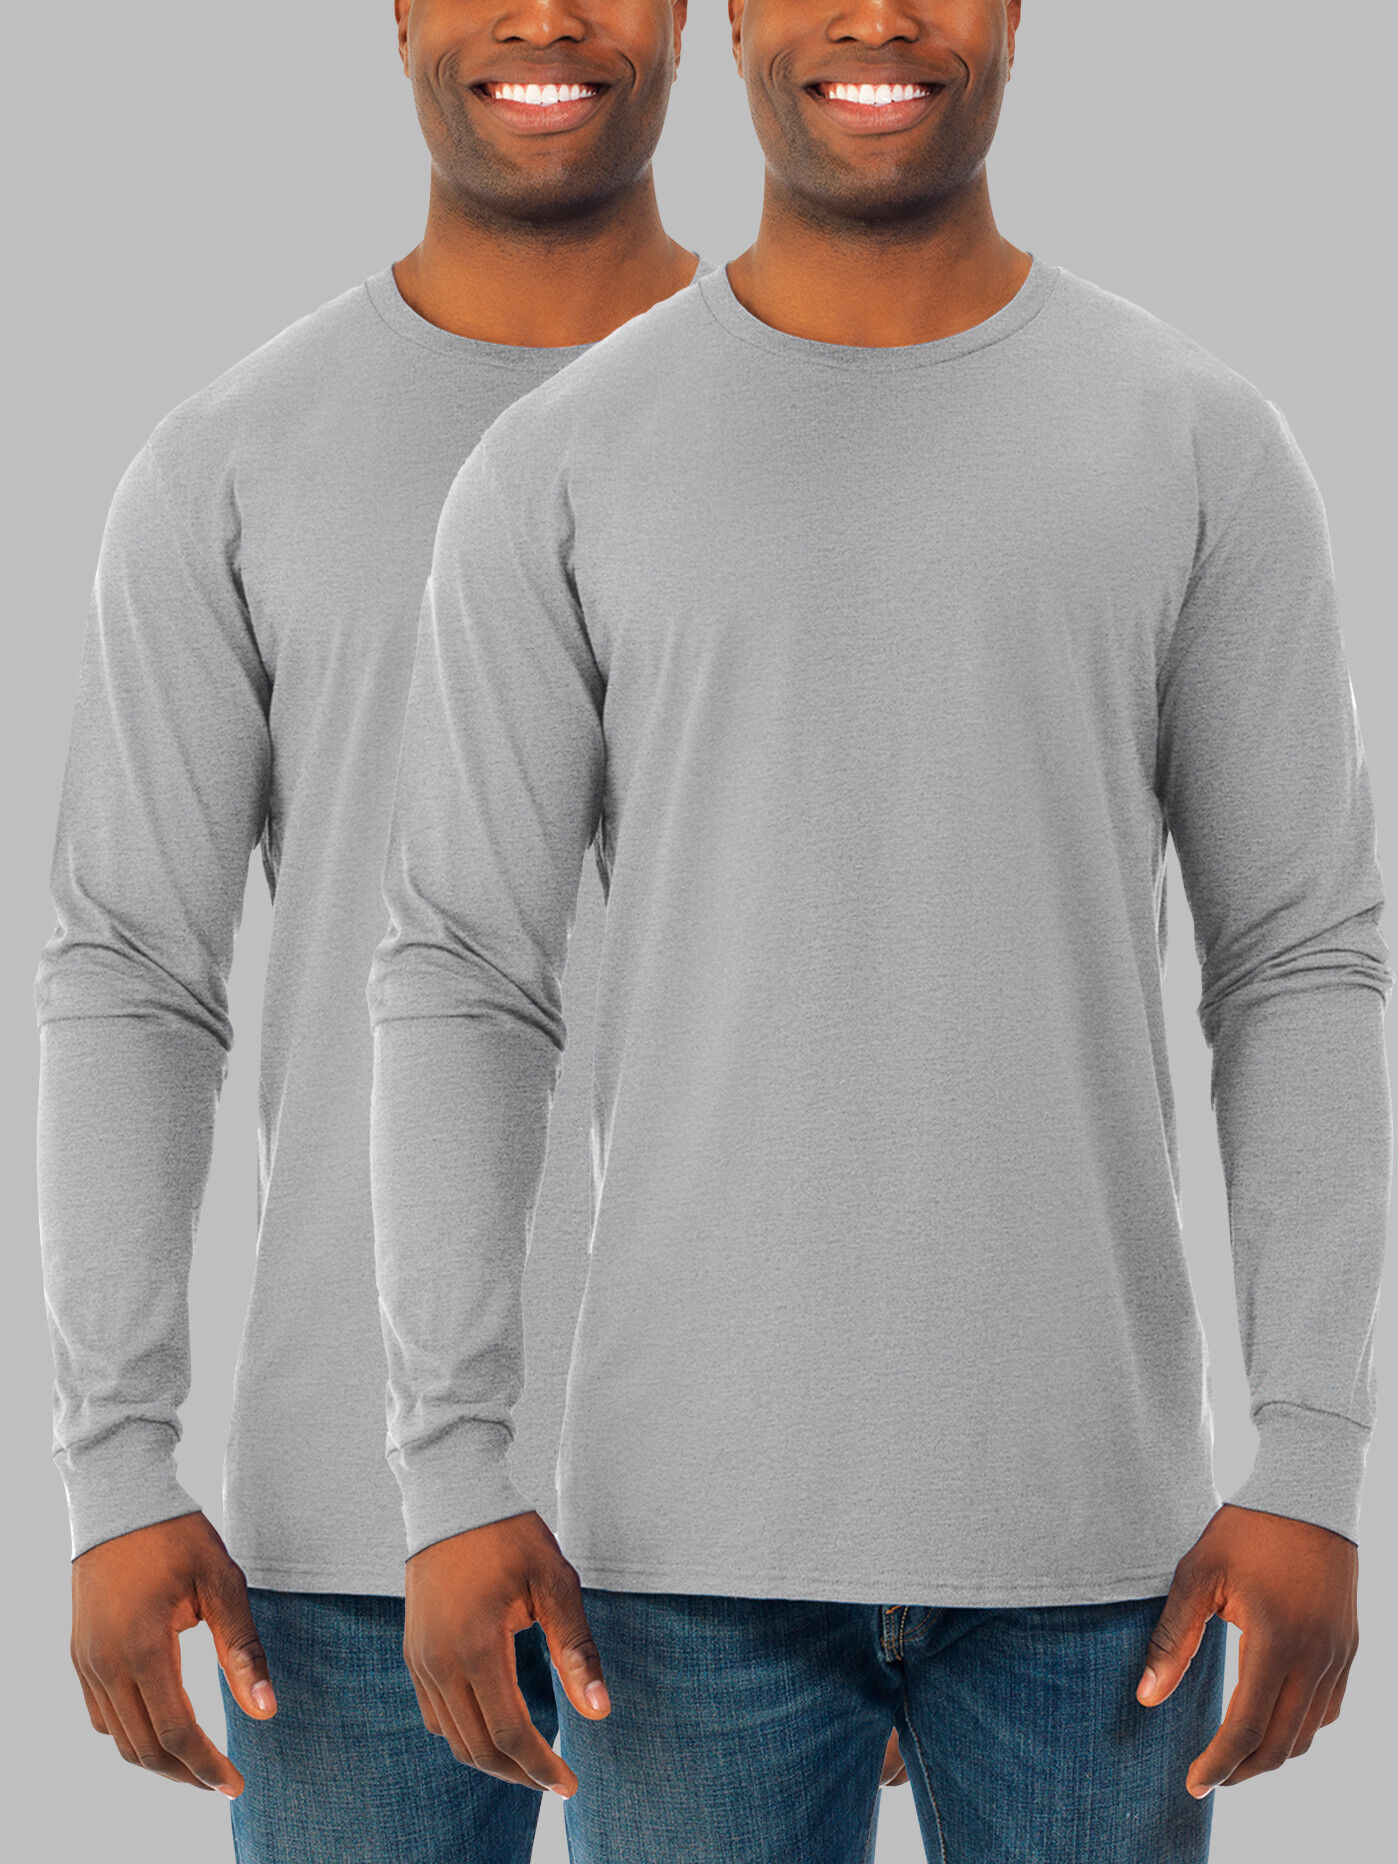 Men's Soft Long Sleeve Crew Neck T-Shirt | Fruit of the Loom